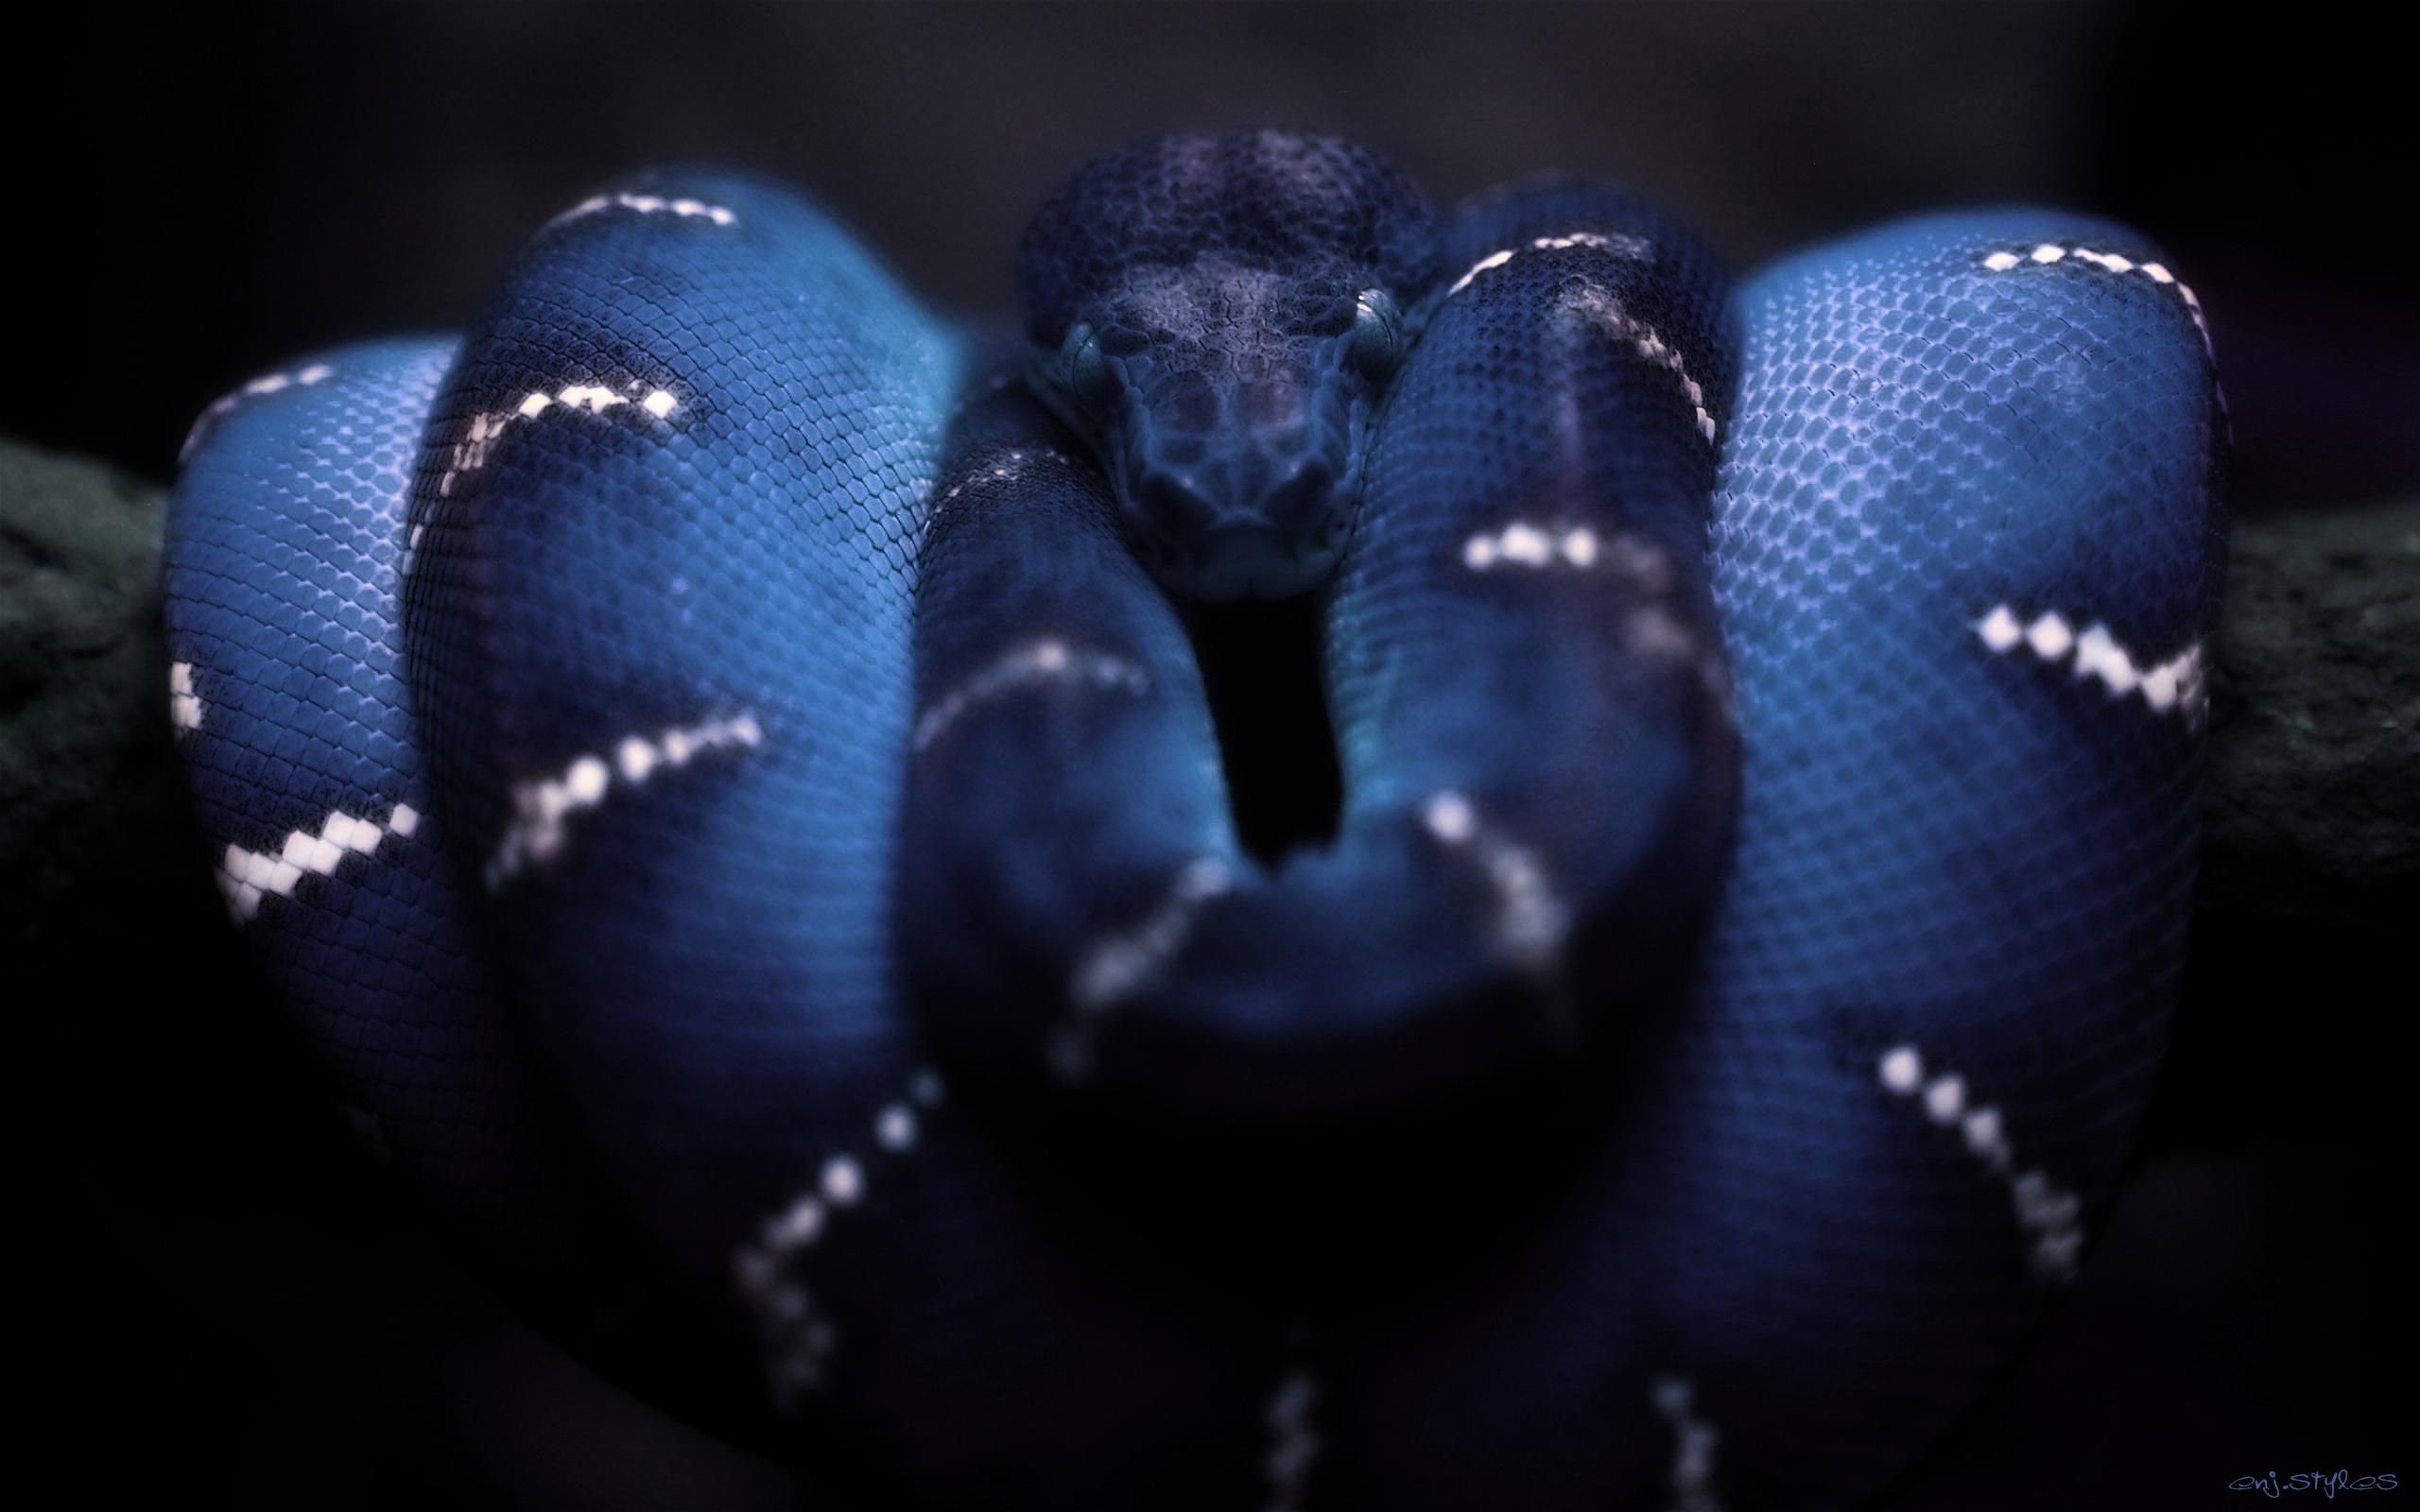 snake anaconda 3D wallpaper HD. Snake wallpaper, Focus photography, Rainbow snake